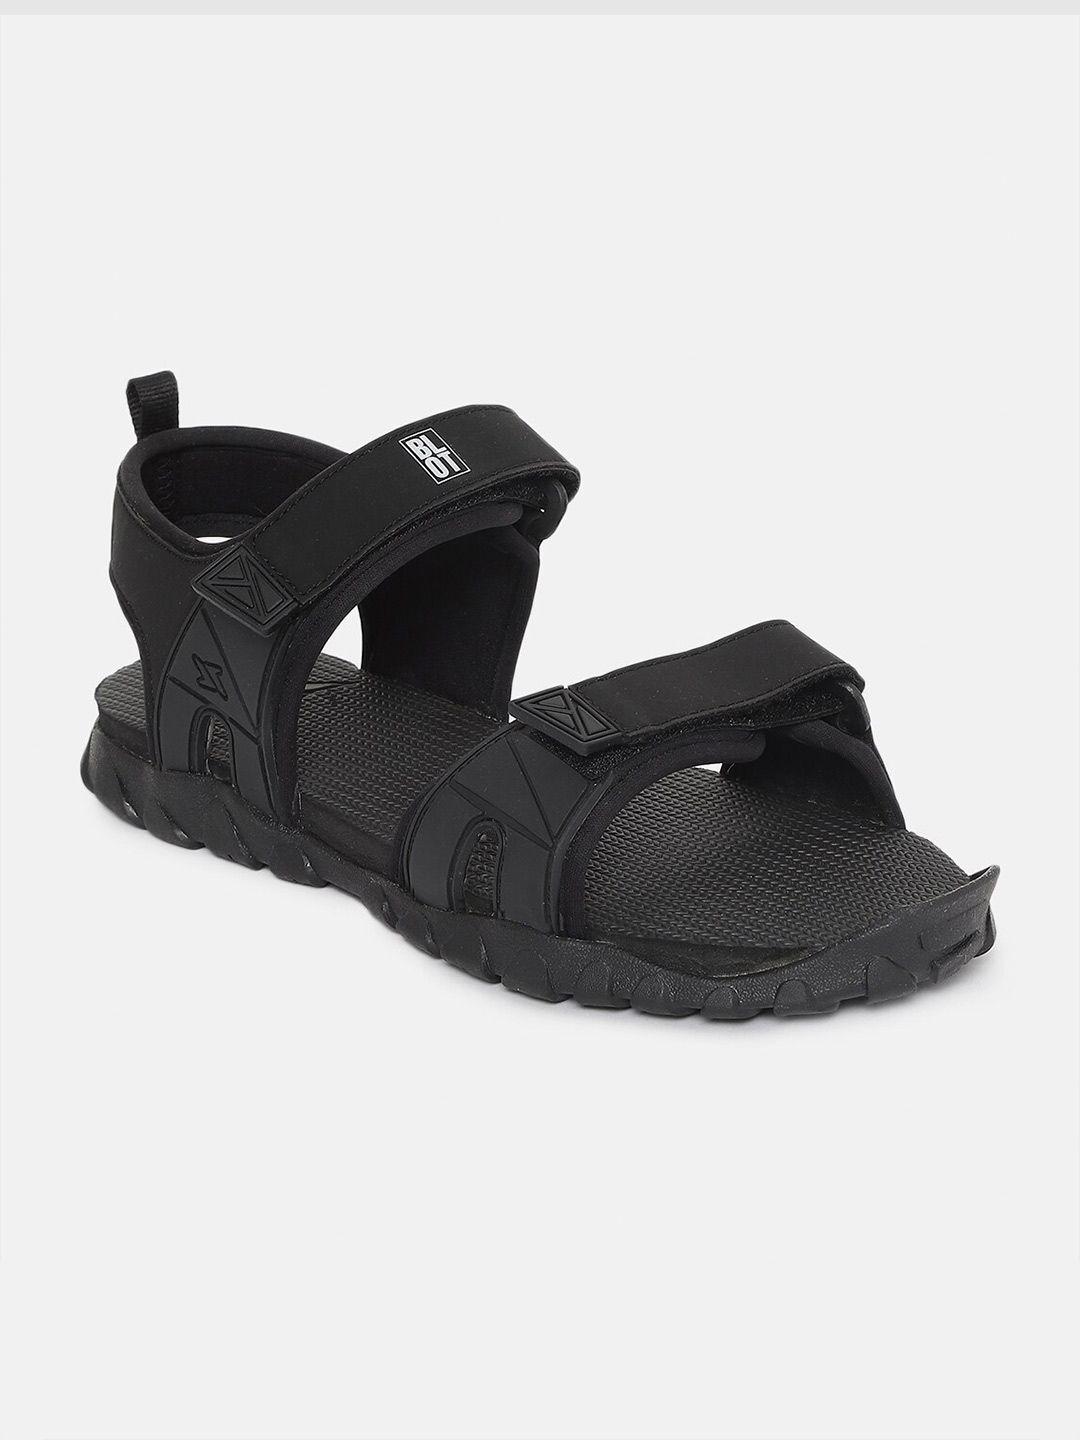 paragon-men-black-solid-sports-sandals